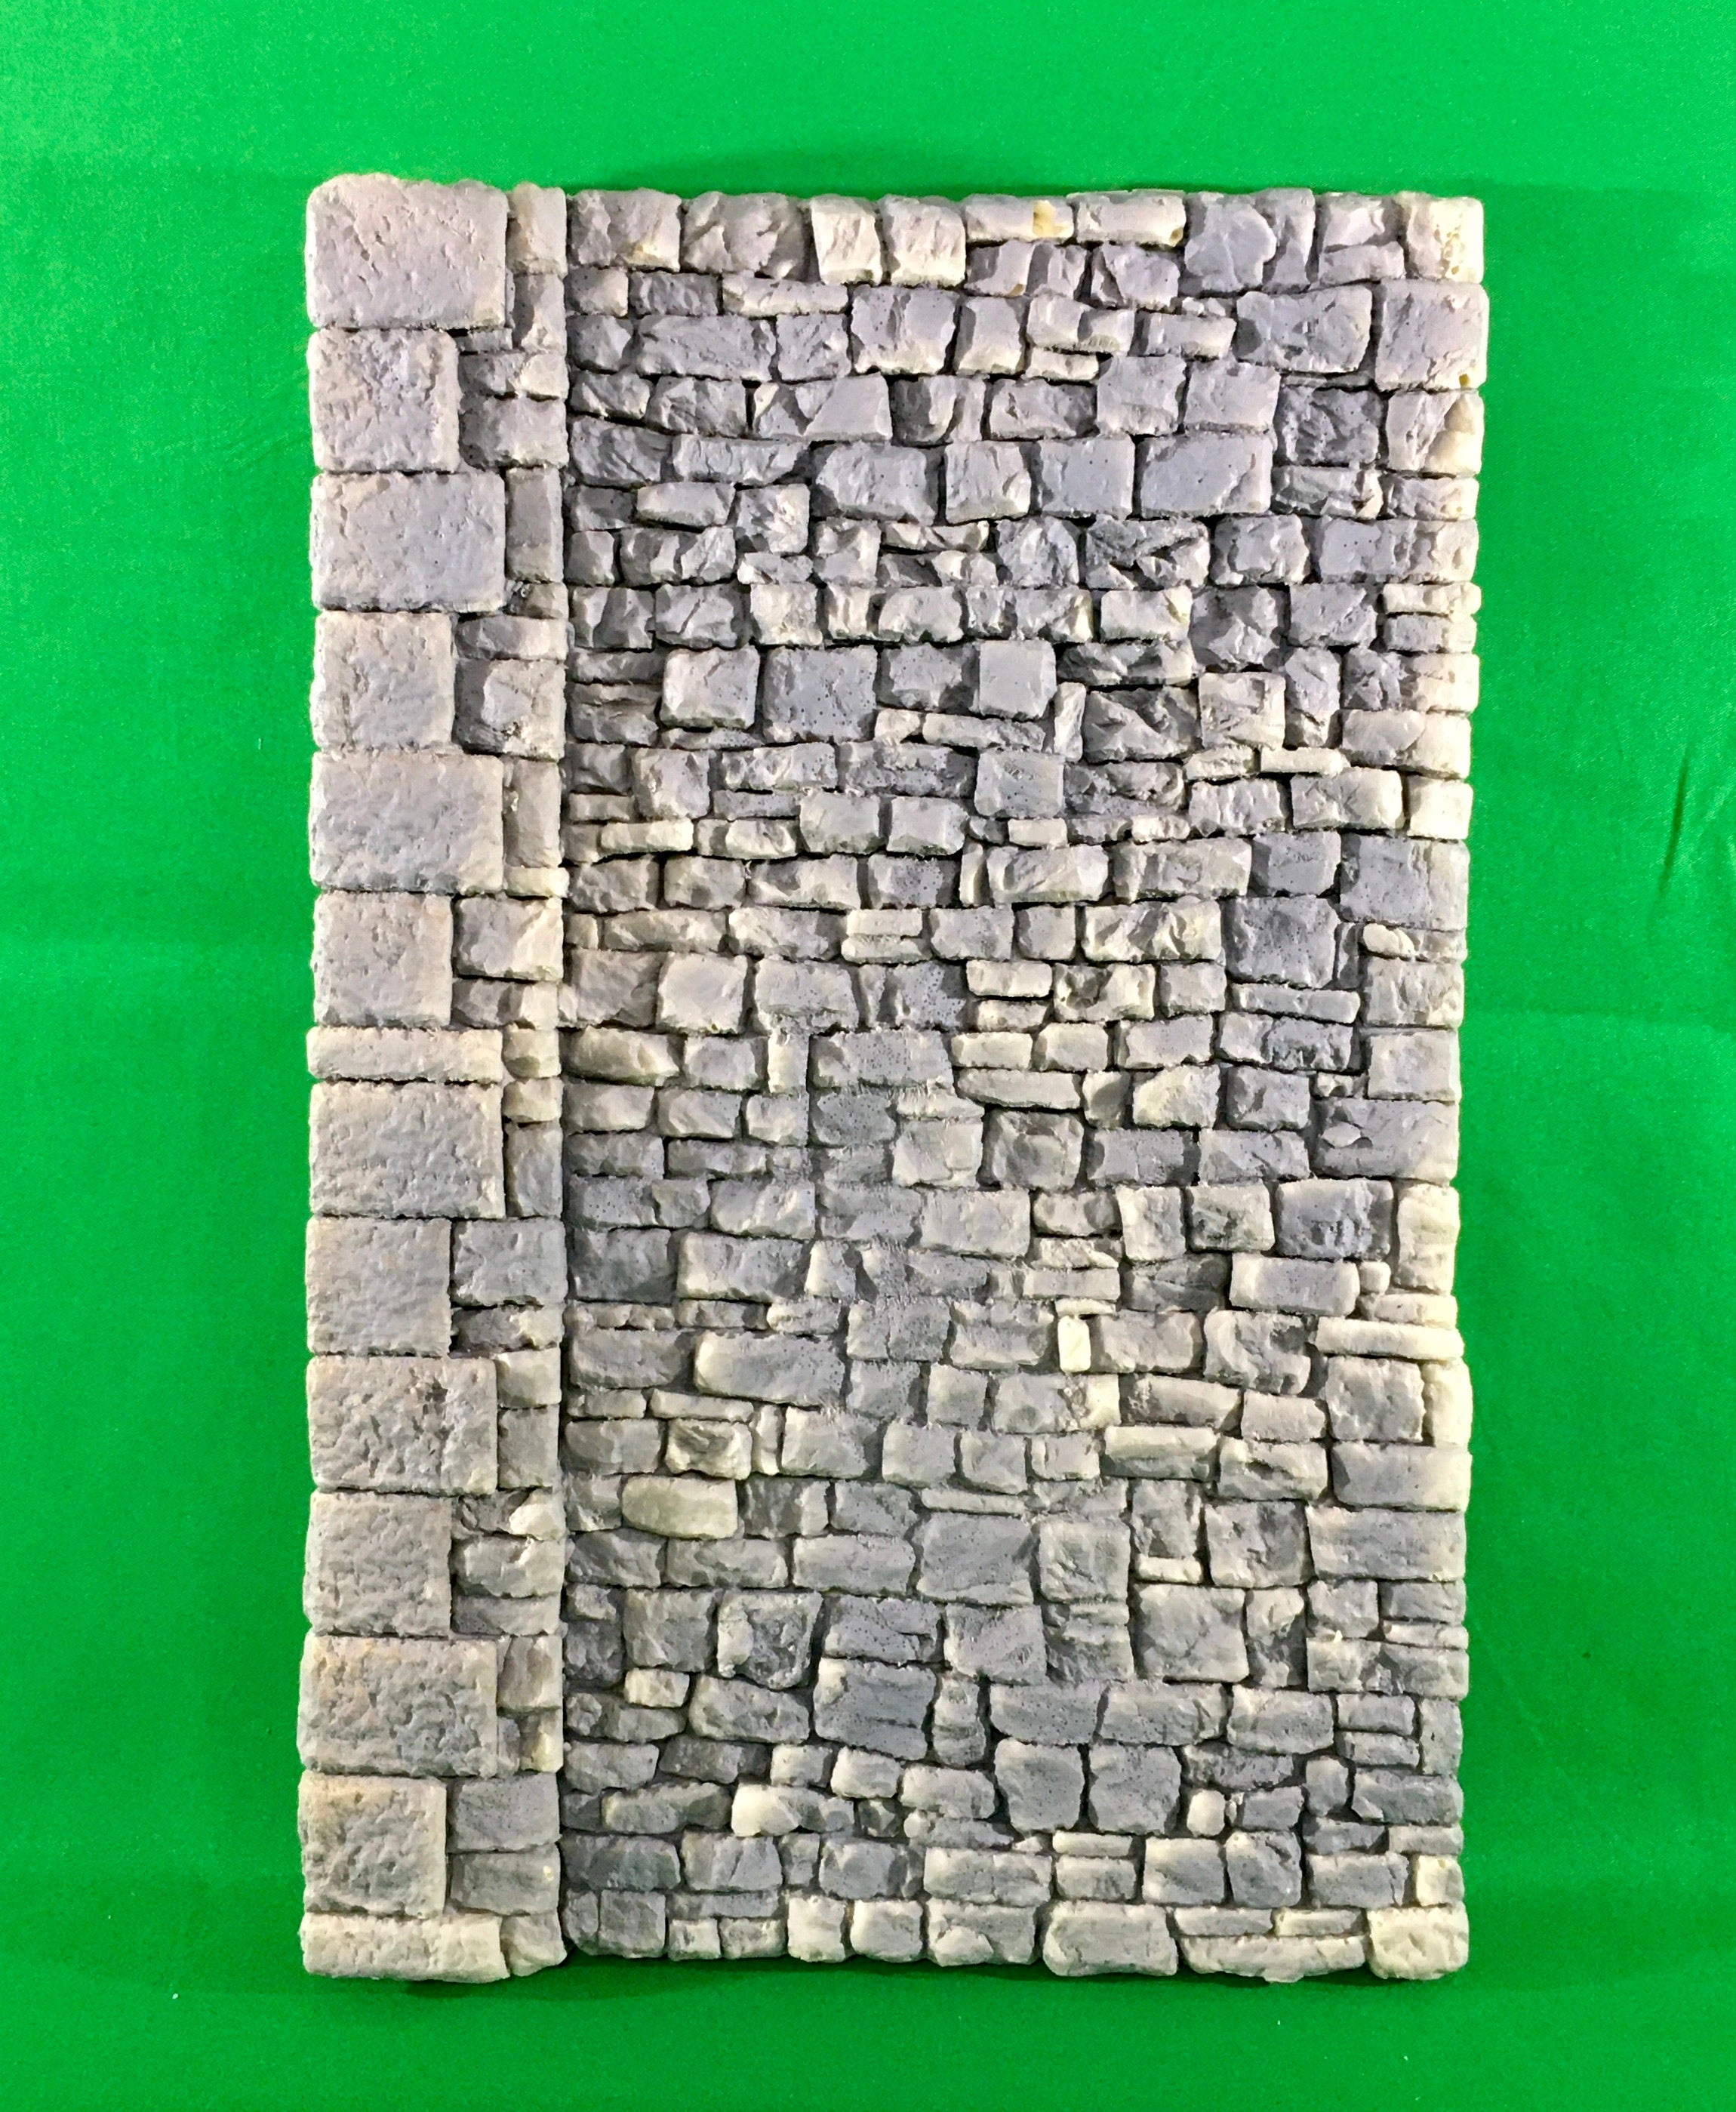 Atherton Scenics FL6160 - "Rough Cut" Vertical Stone Wall